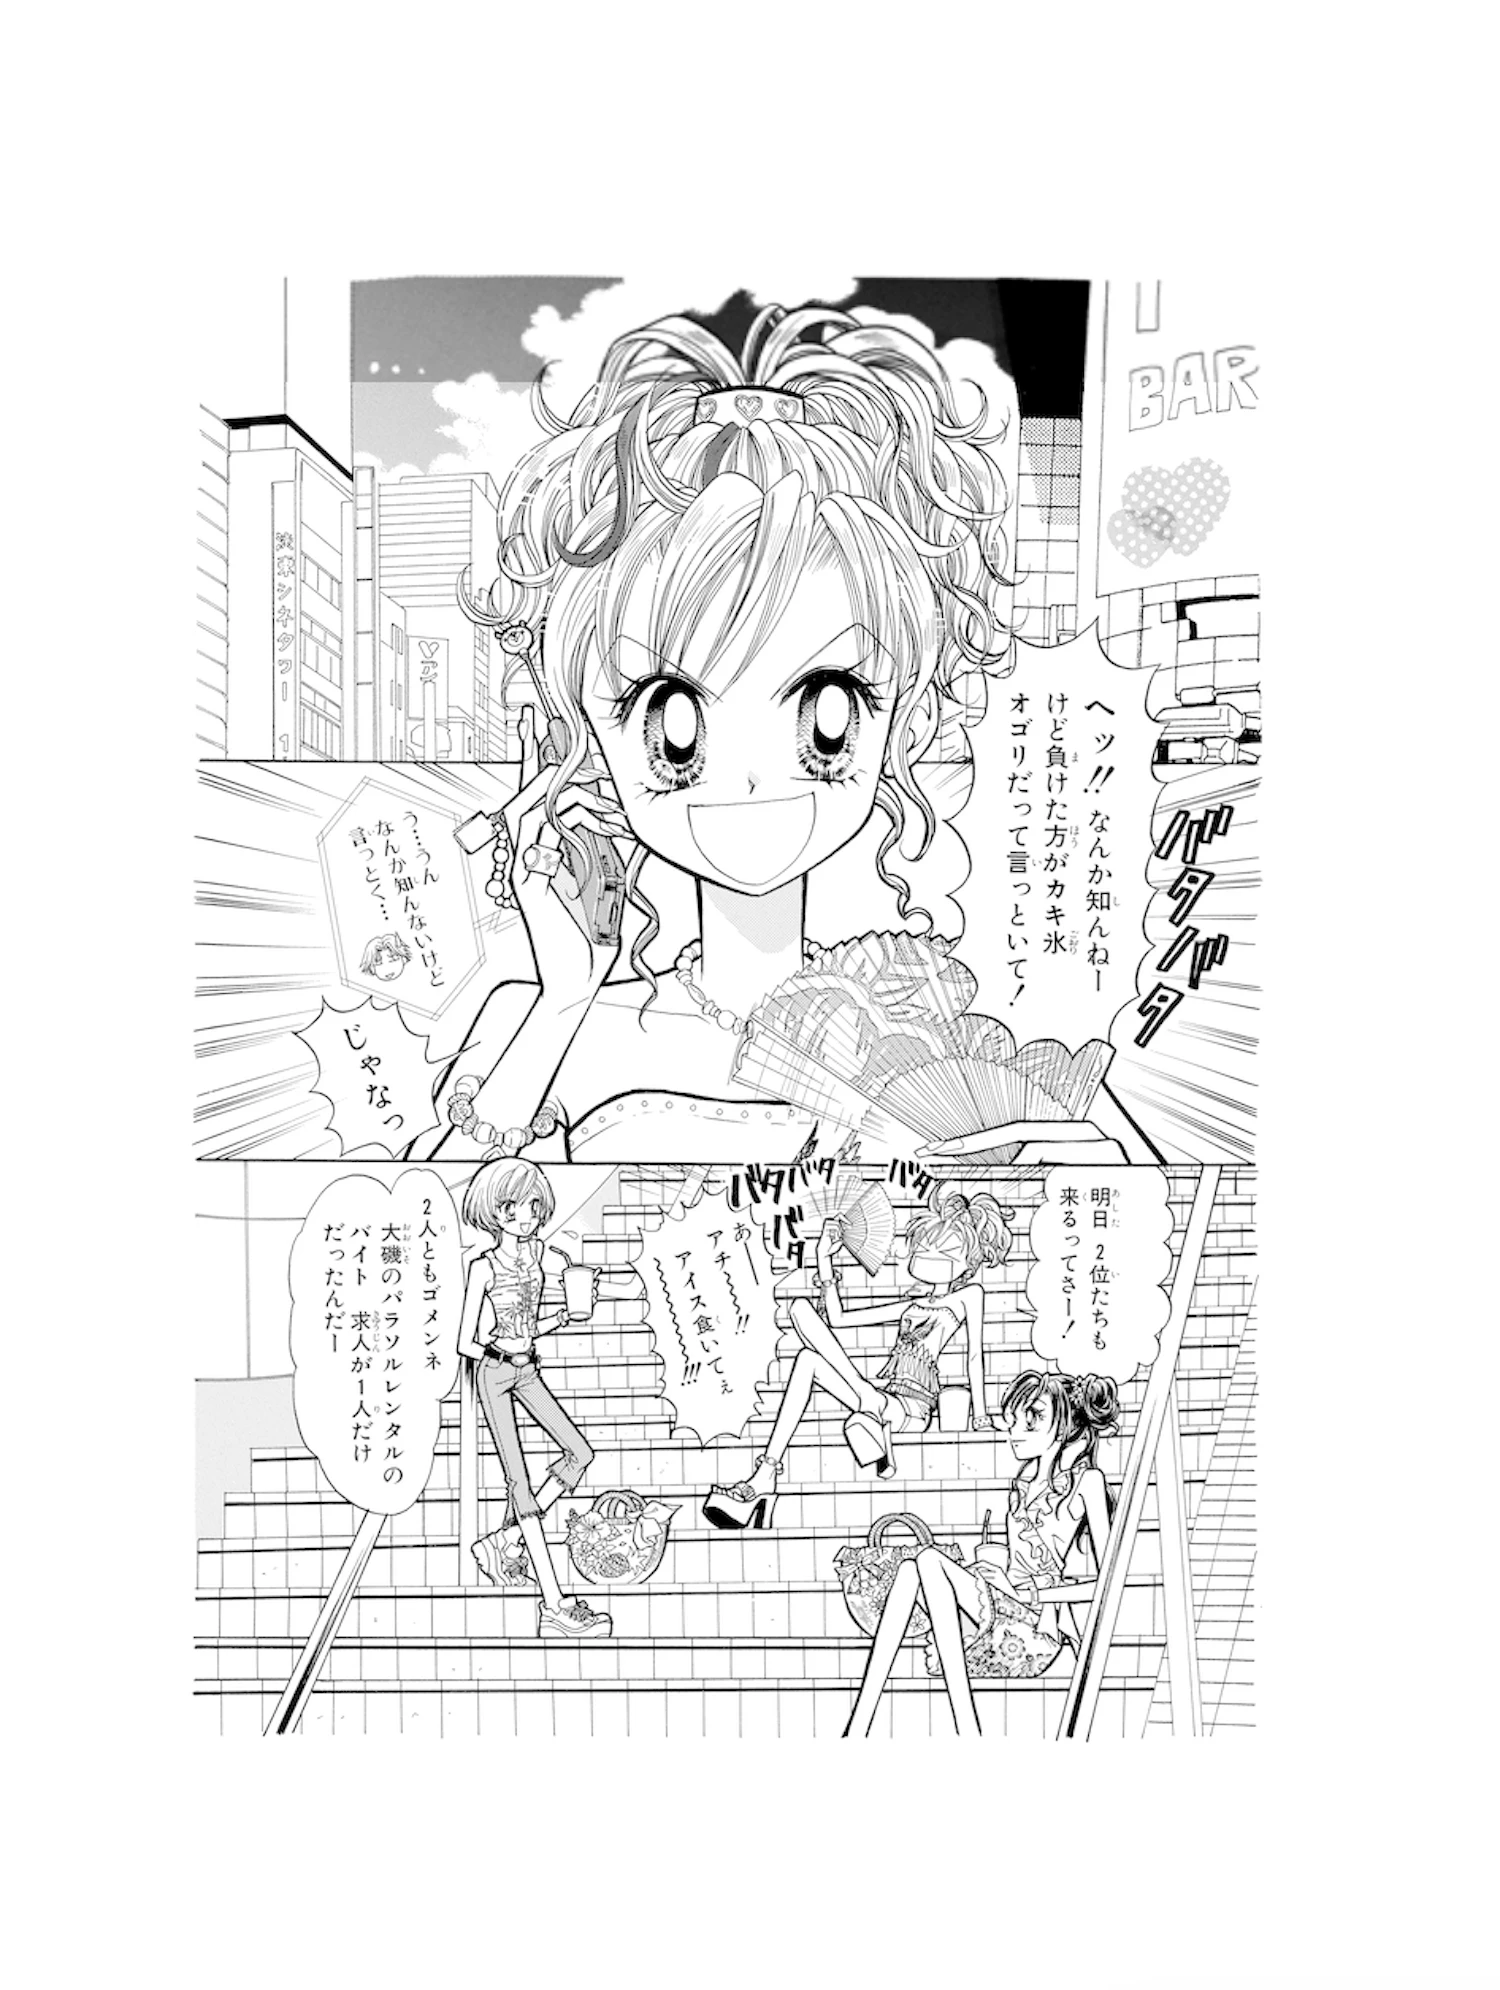 "GALS!" Volume 9 (c) Mihona Fujii/Shueisha